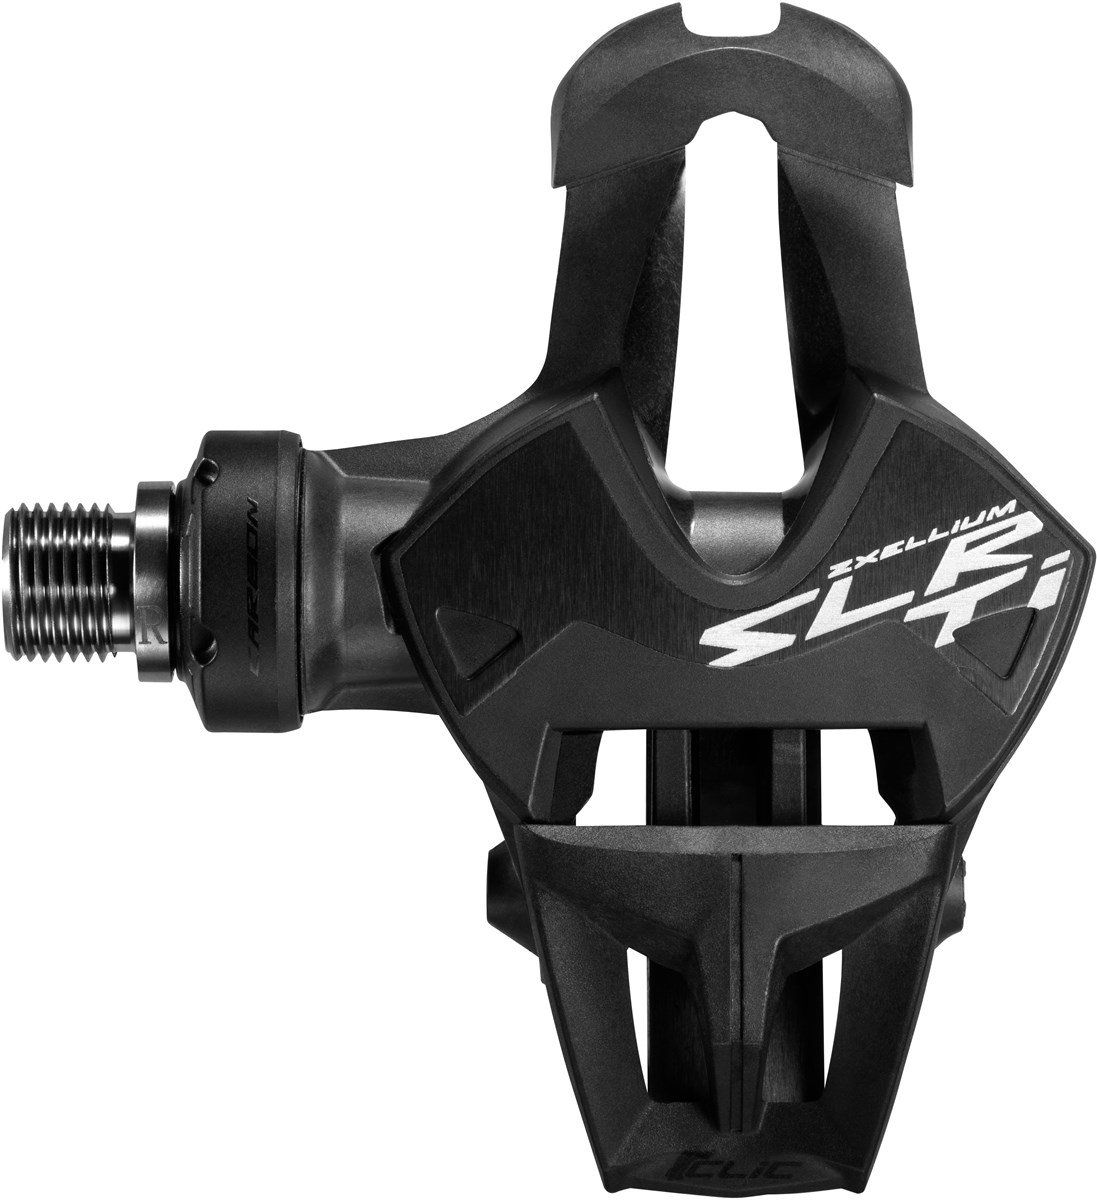 Mavic Zxellium SLR Ti Road Pedals product image